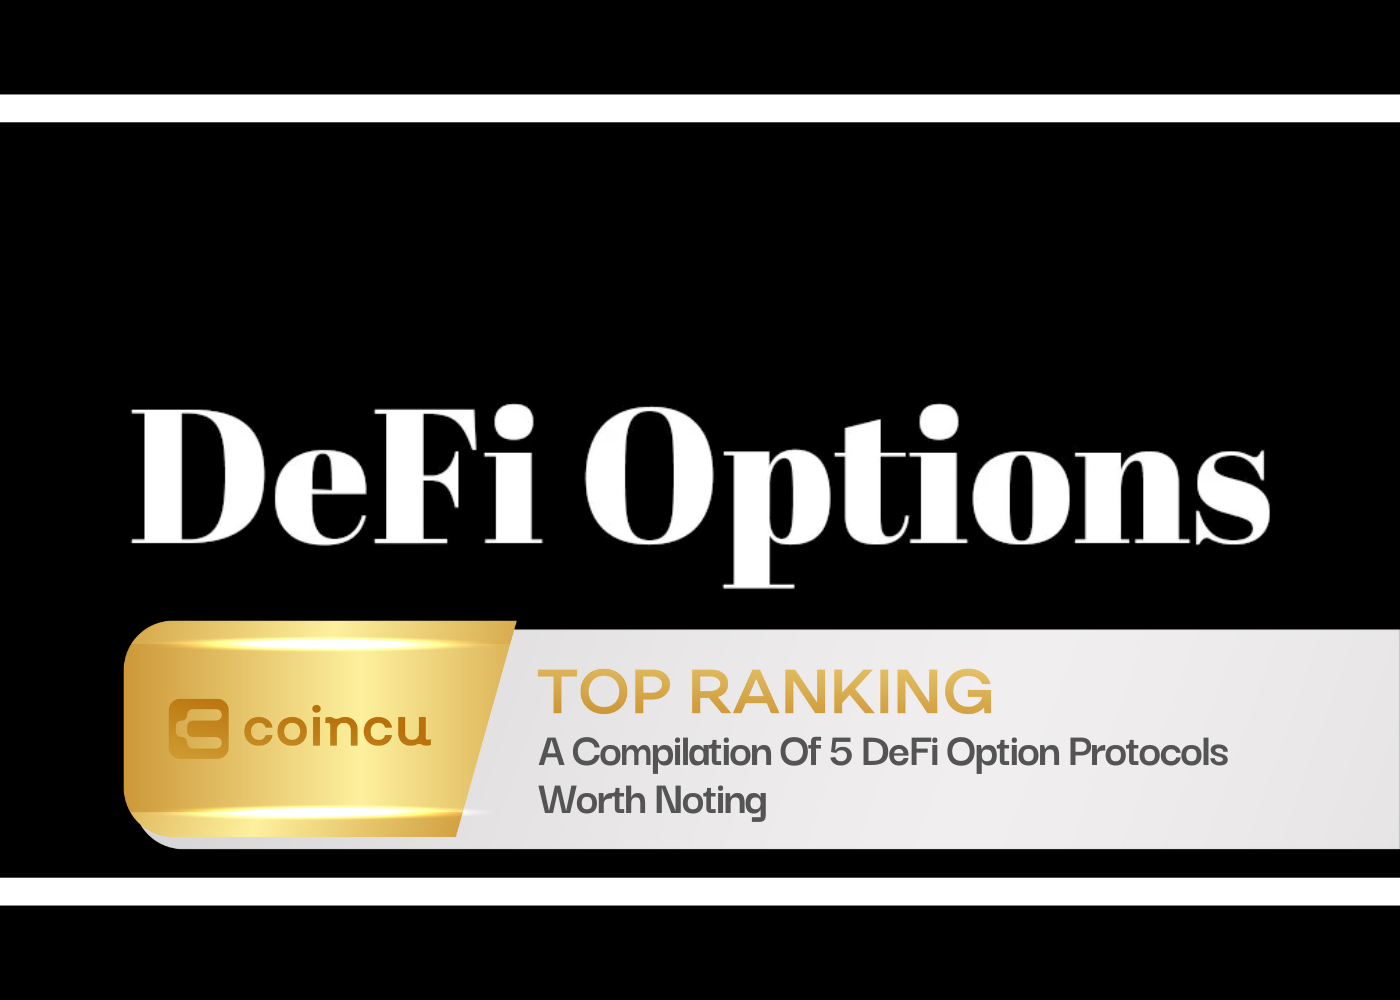 A Compilation Of 5 DeFi Option Protocols Worth Noting